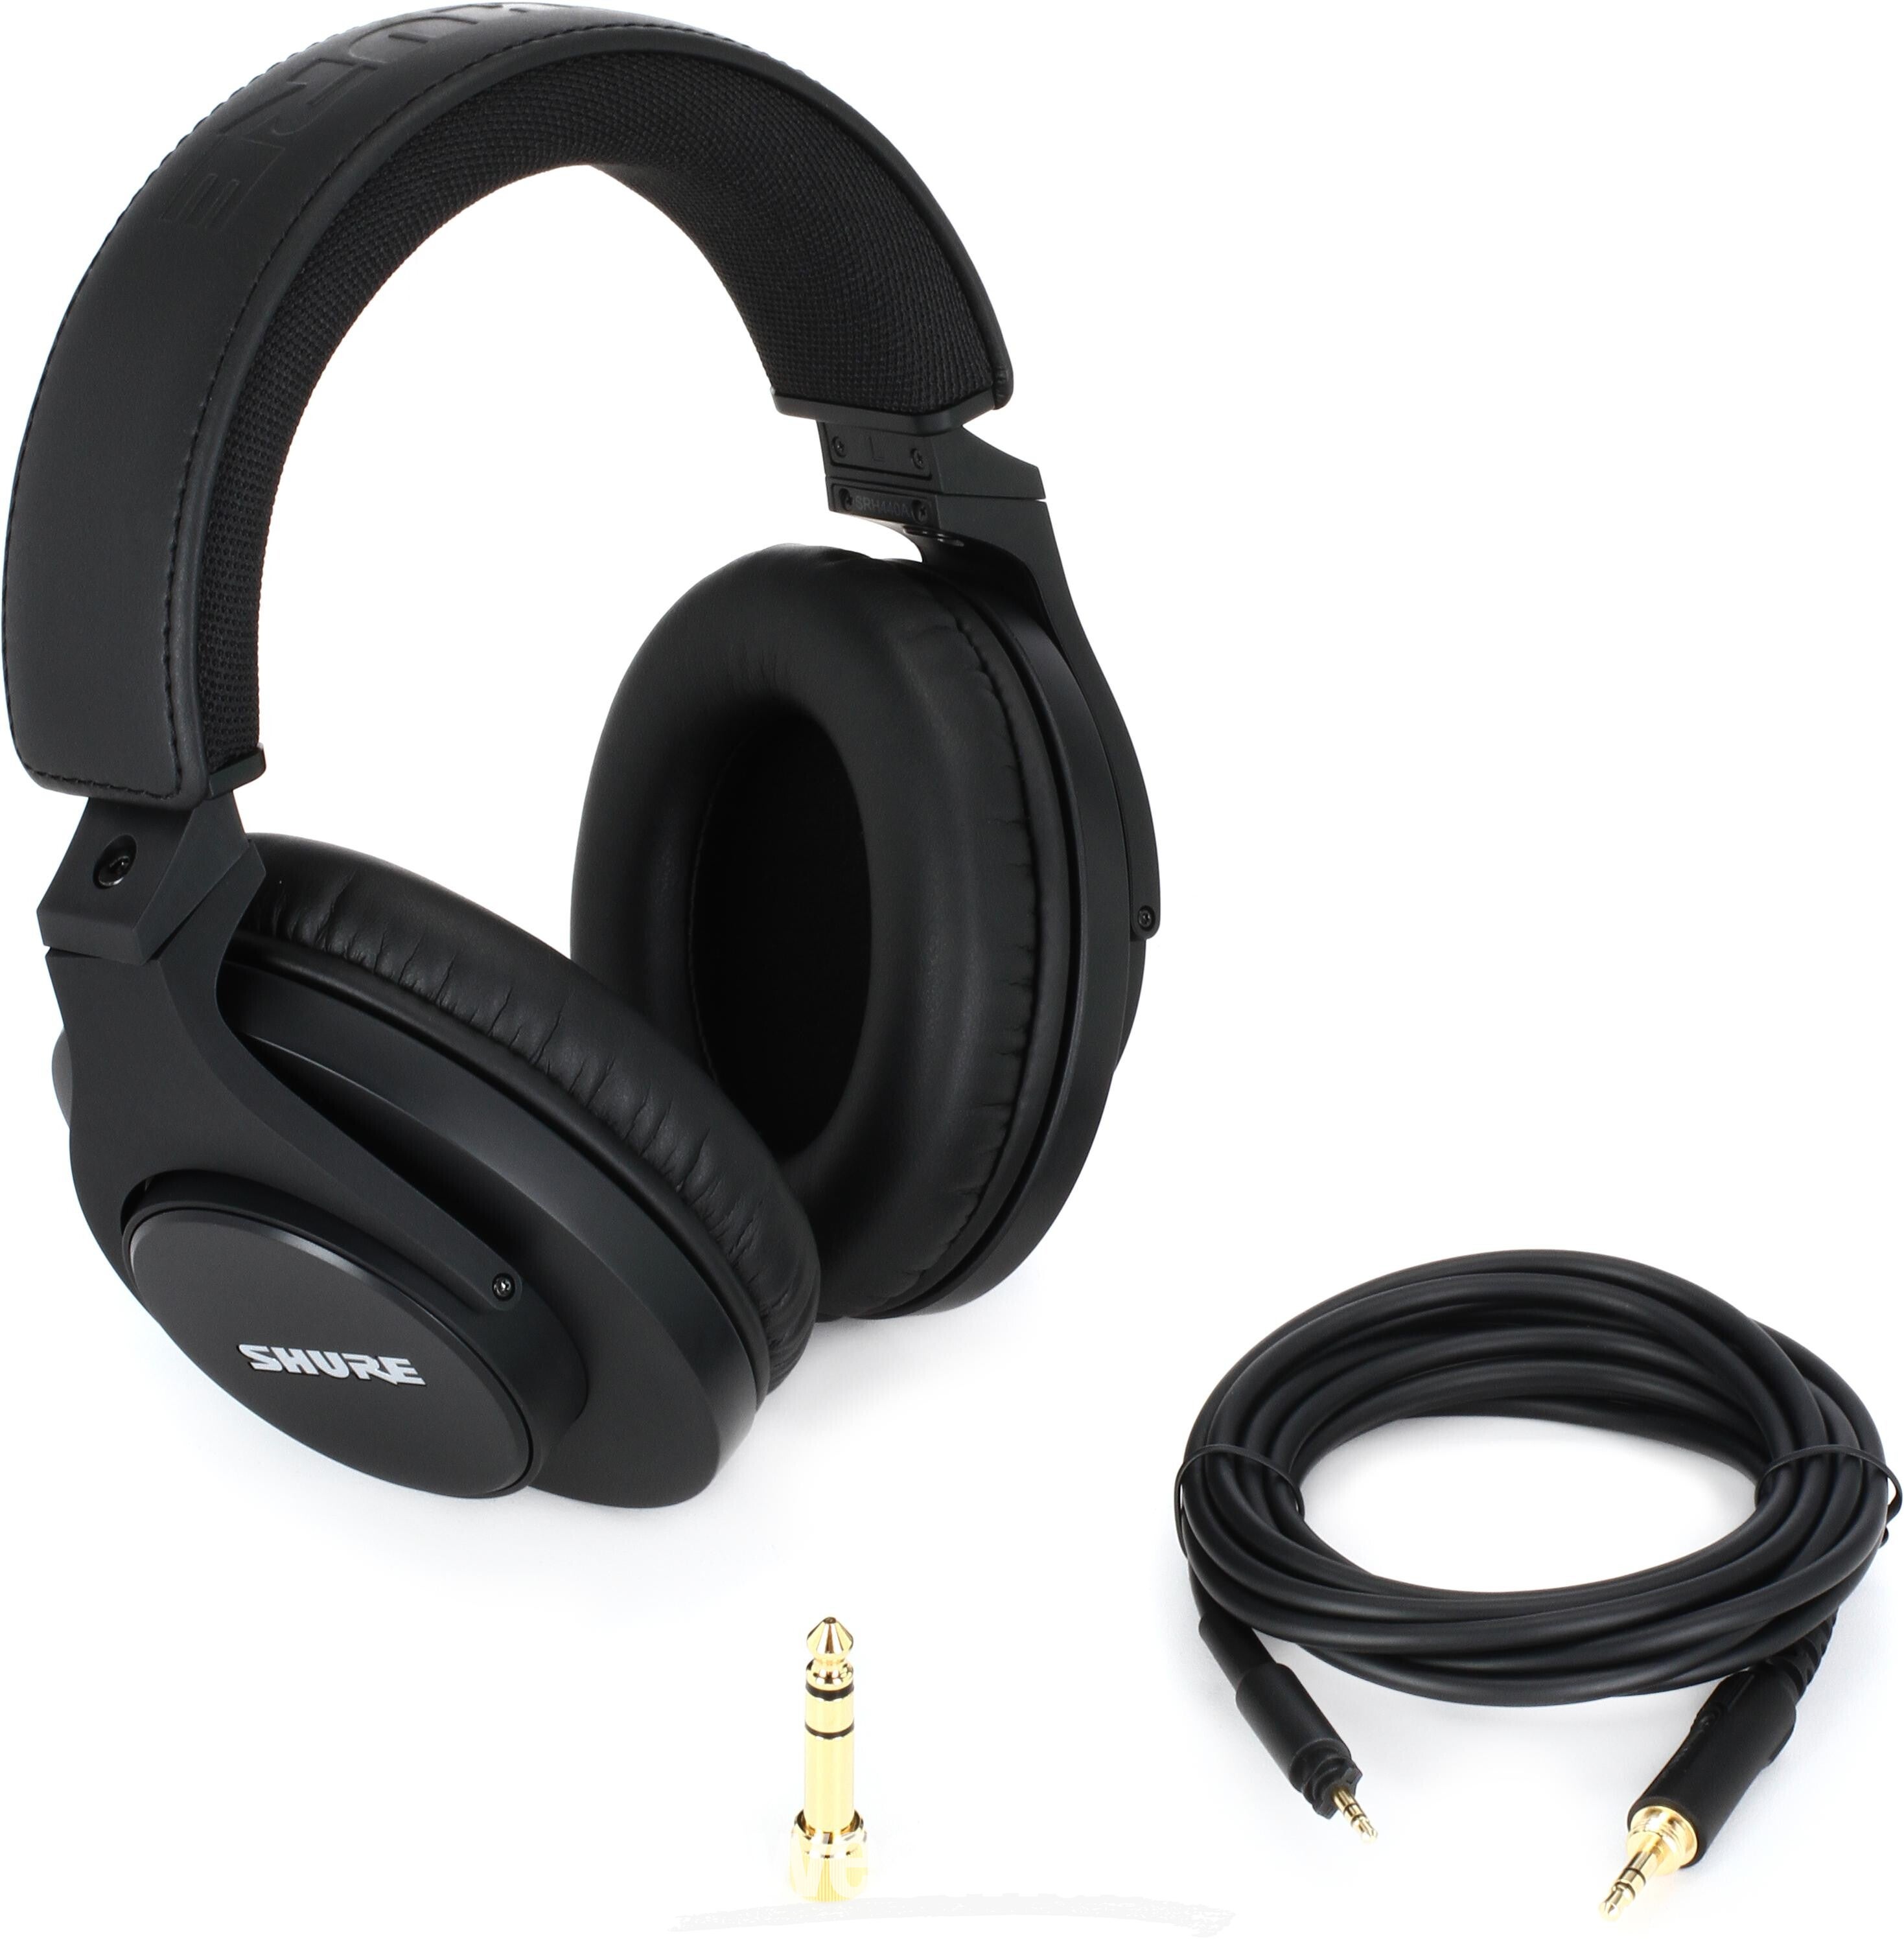 Shure SRH440A Closed-back Studio Headphones